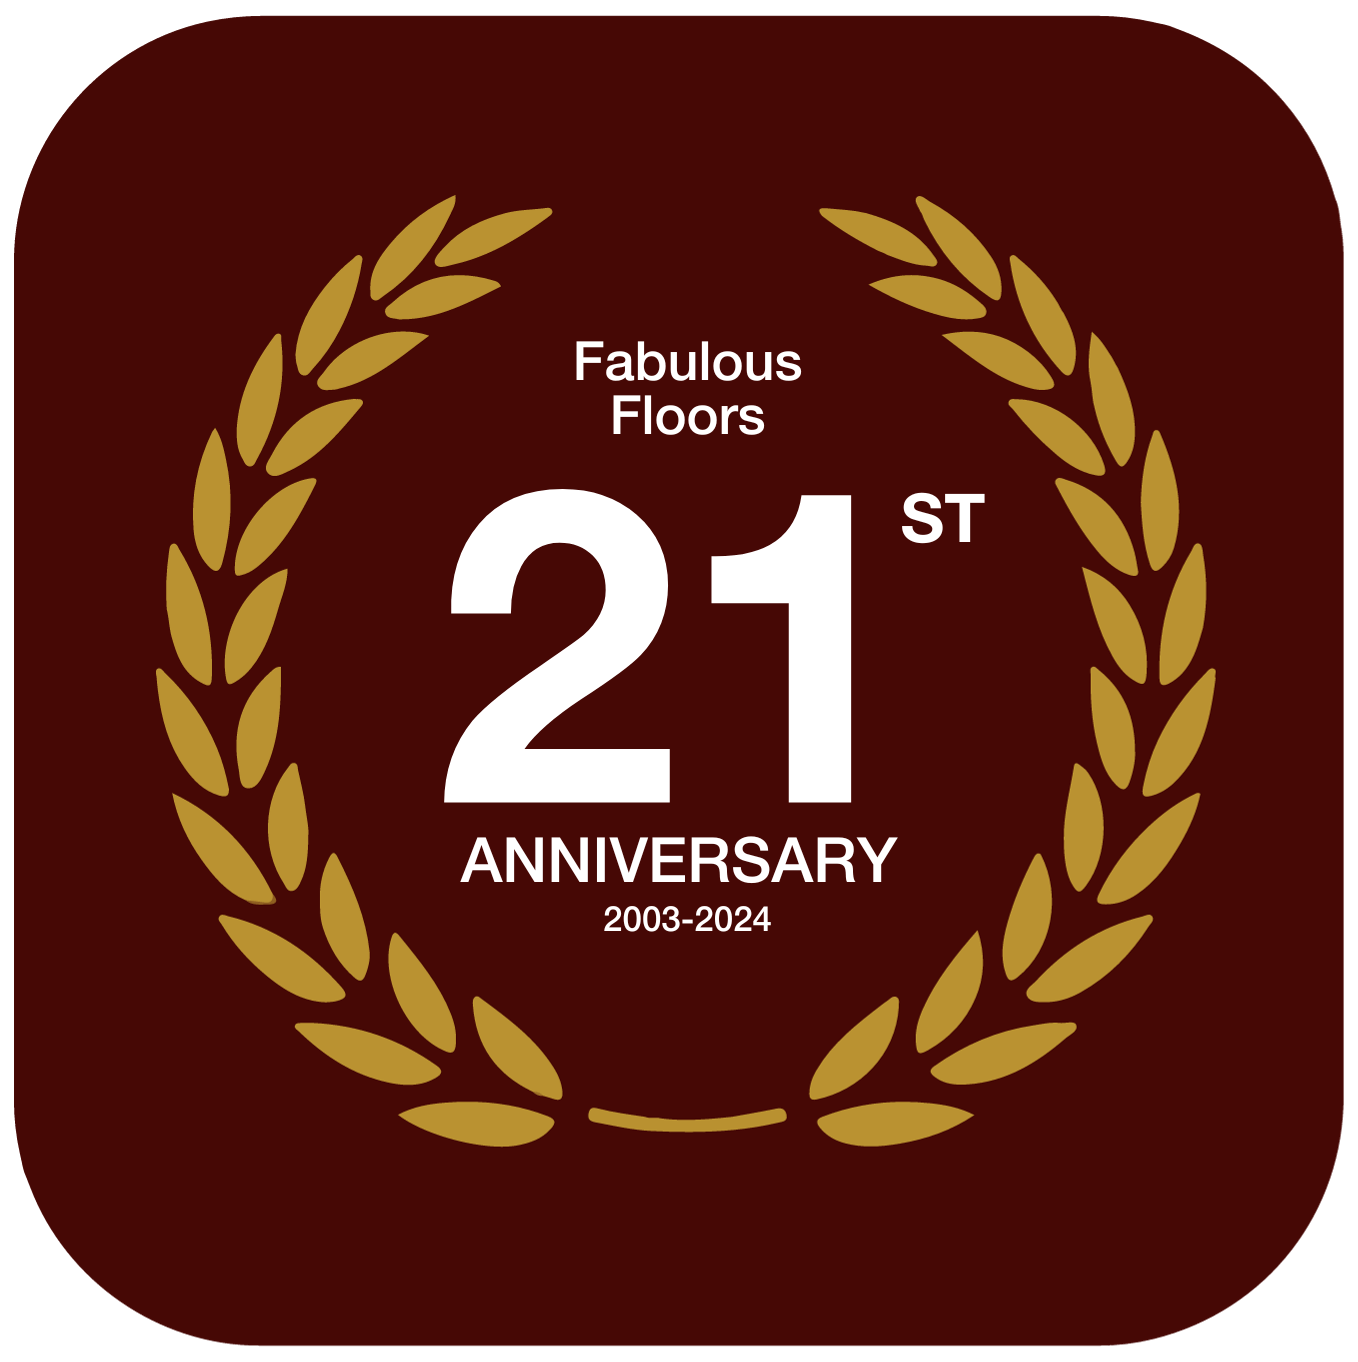 20th anniversary for fabulous floors